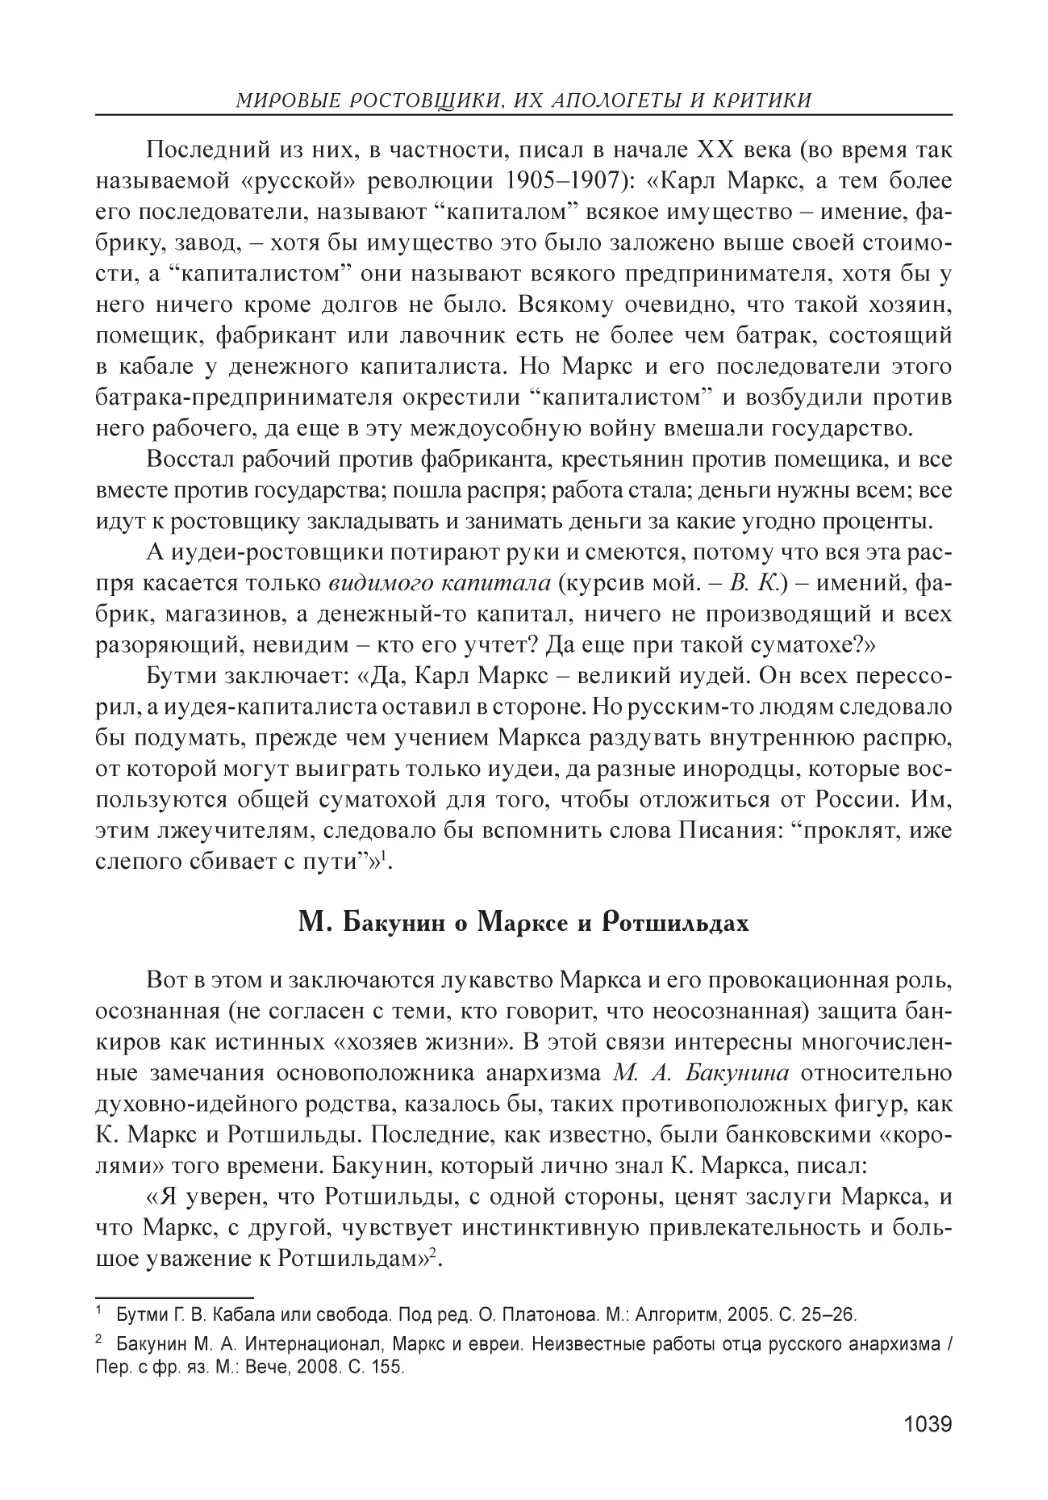 М. Бакунин о Марксе и Ротшильдах